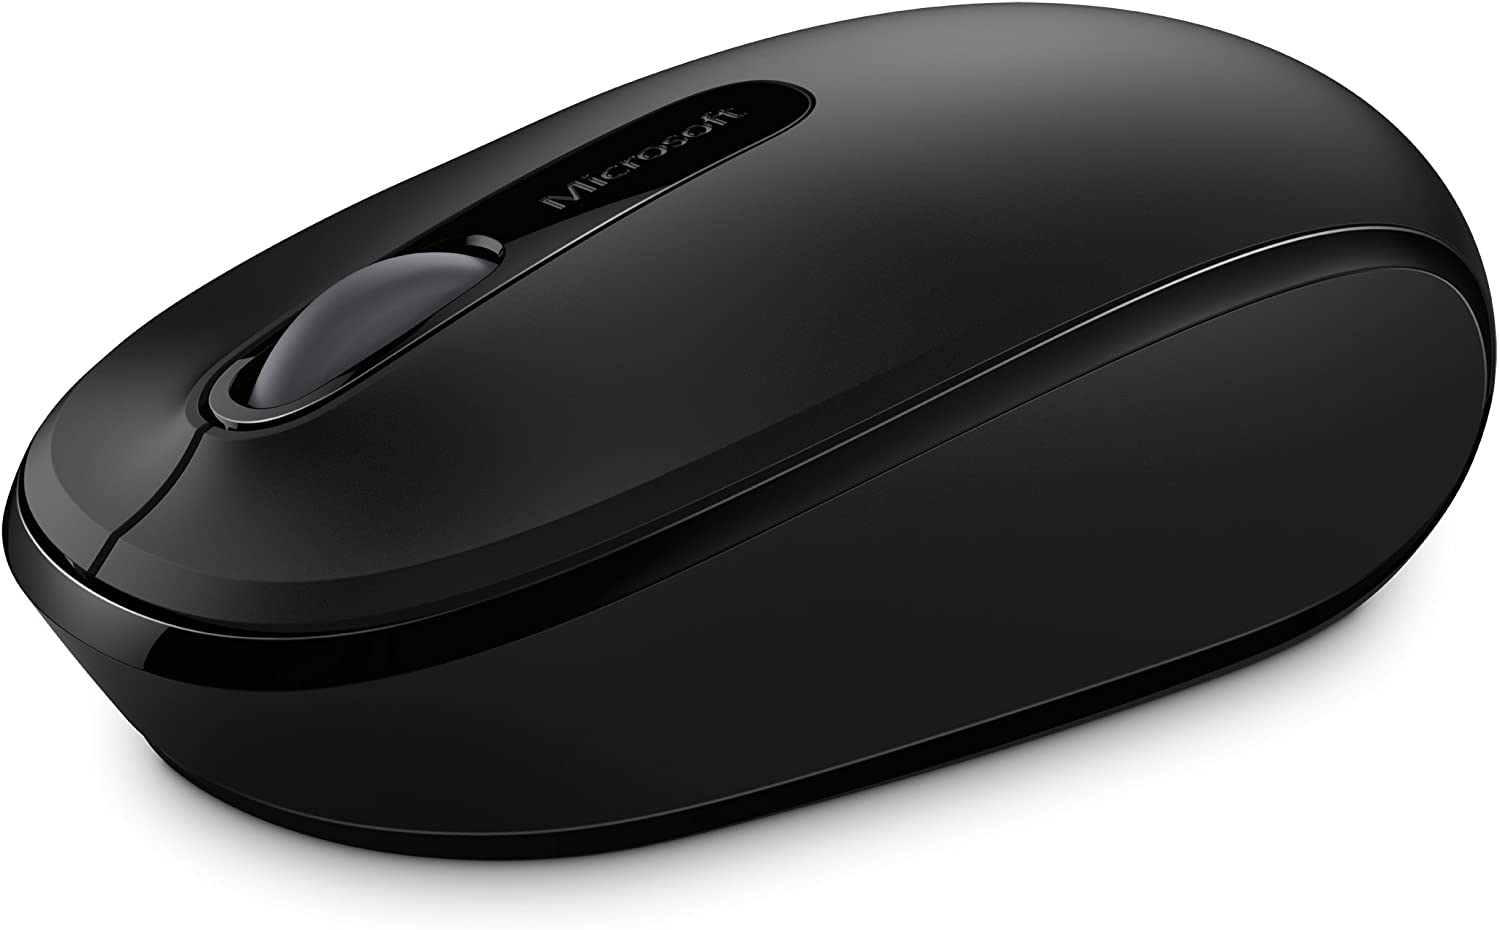 Microsoft Wireless Mouse 1850 เมาส์ไร้สาย สีดำ ของแท้ ประกันศูนย์ 3ปี (Black)